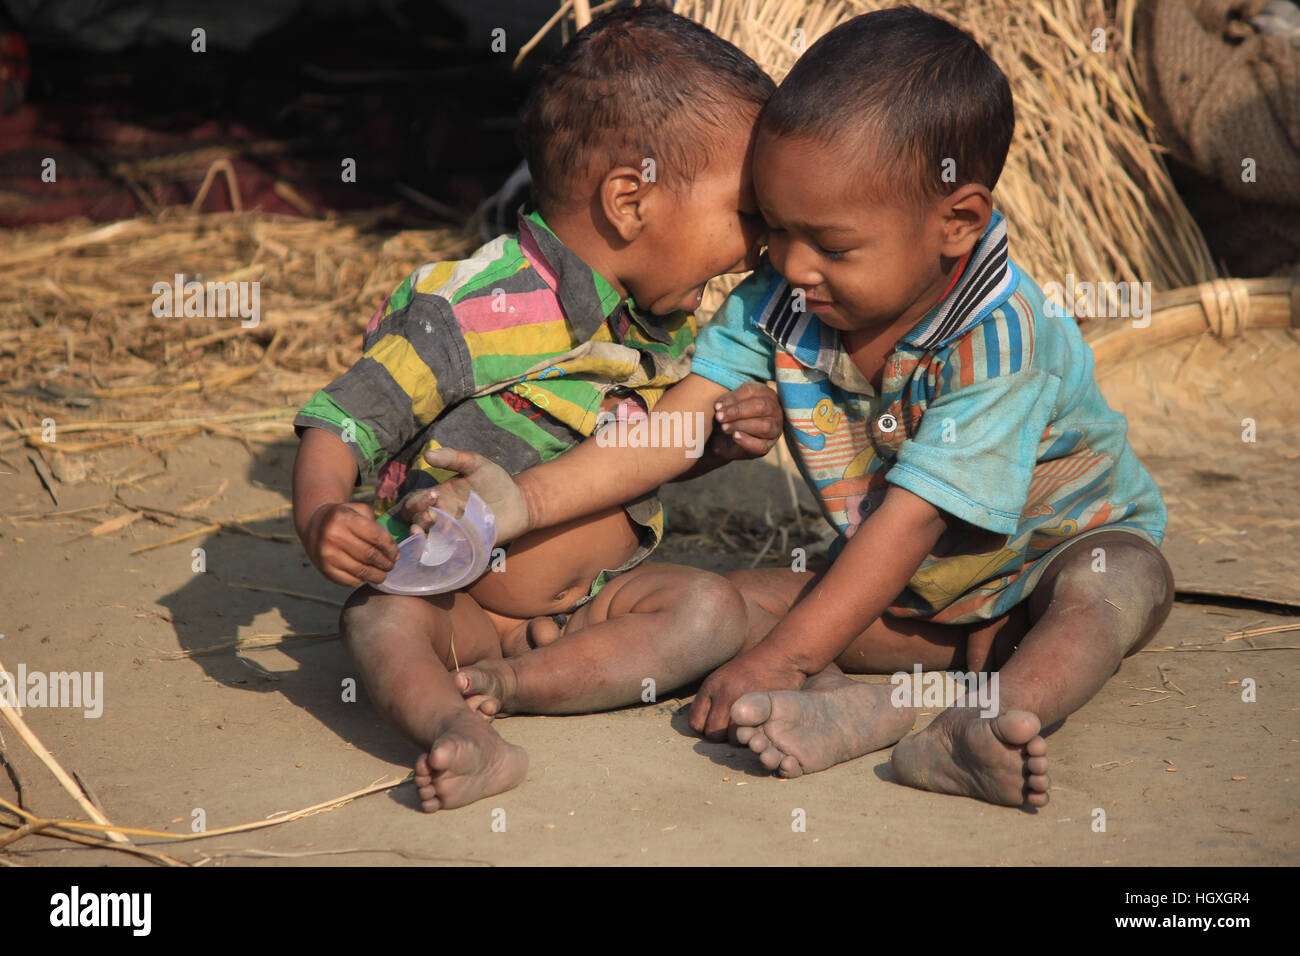 Homeless Kids Poor Little Vagabond Children In India Stock Photo Alamy